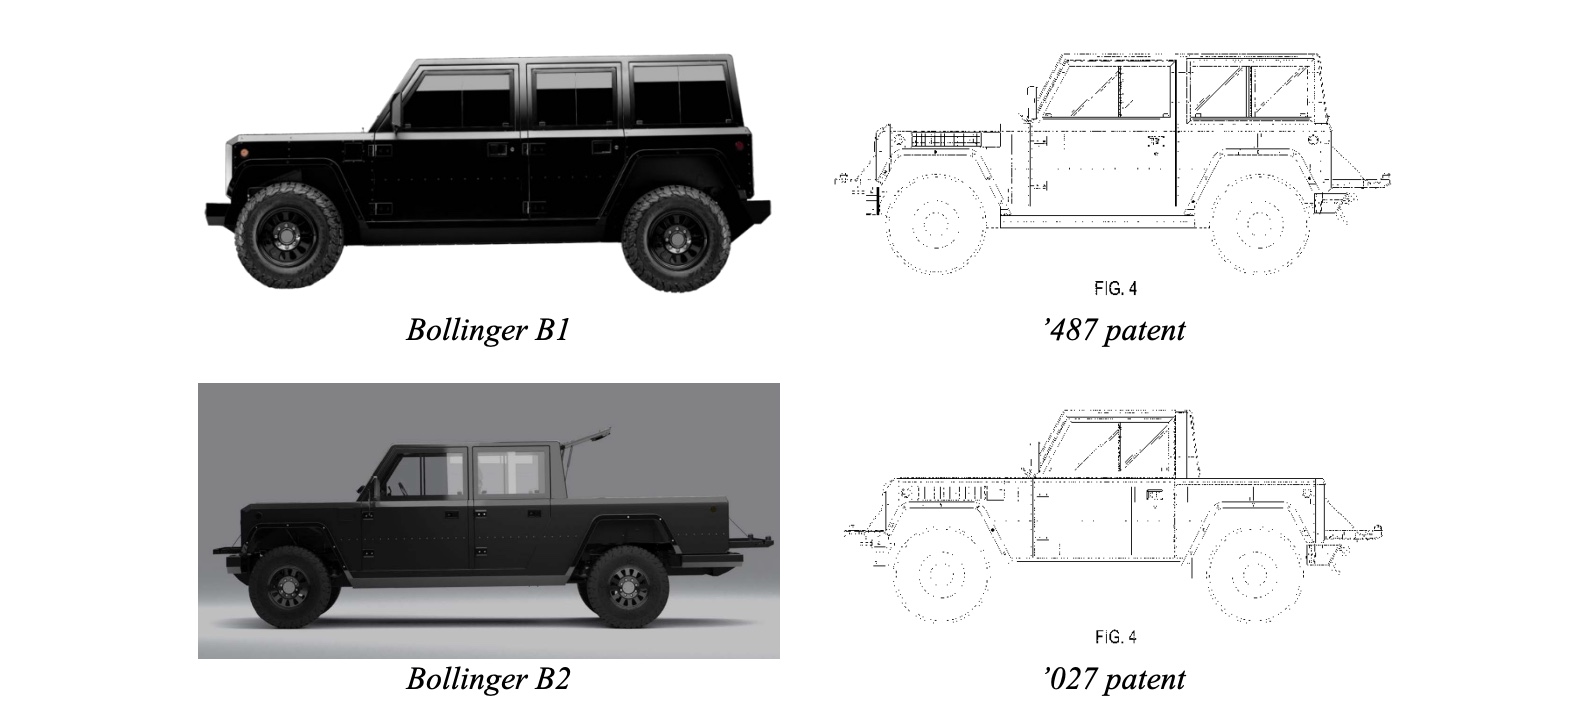 Bollinger B1 and B2 drawings